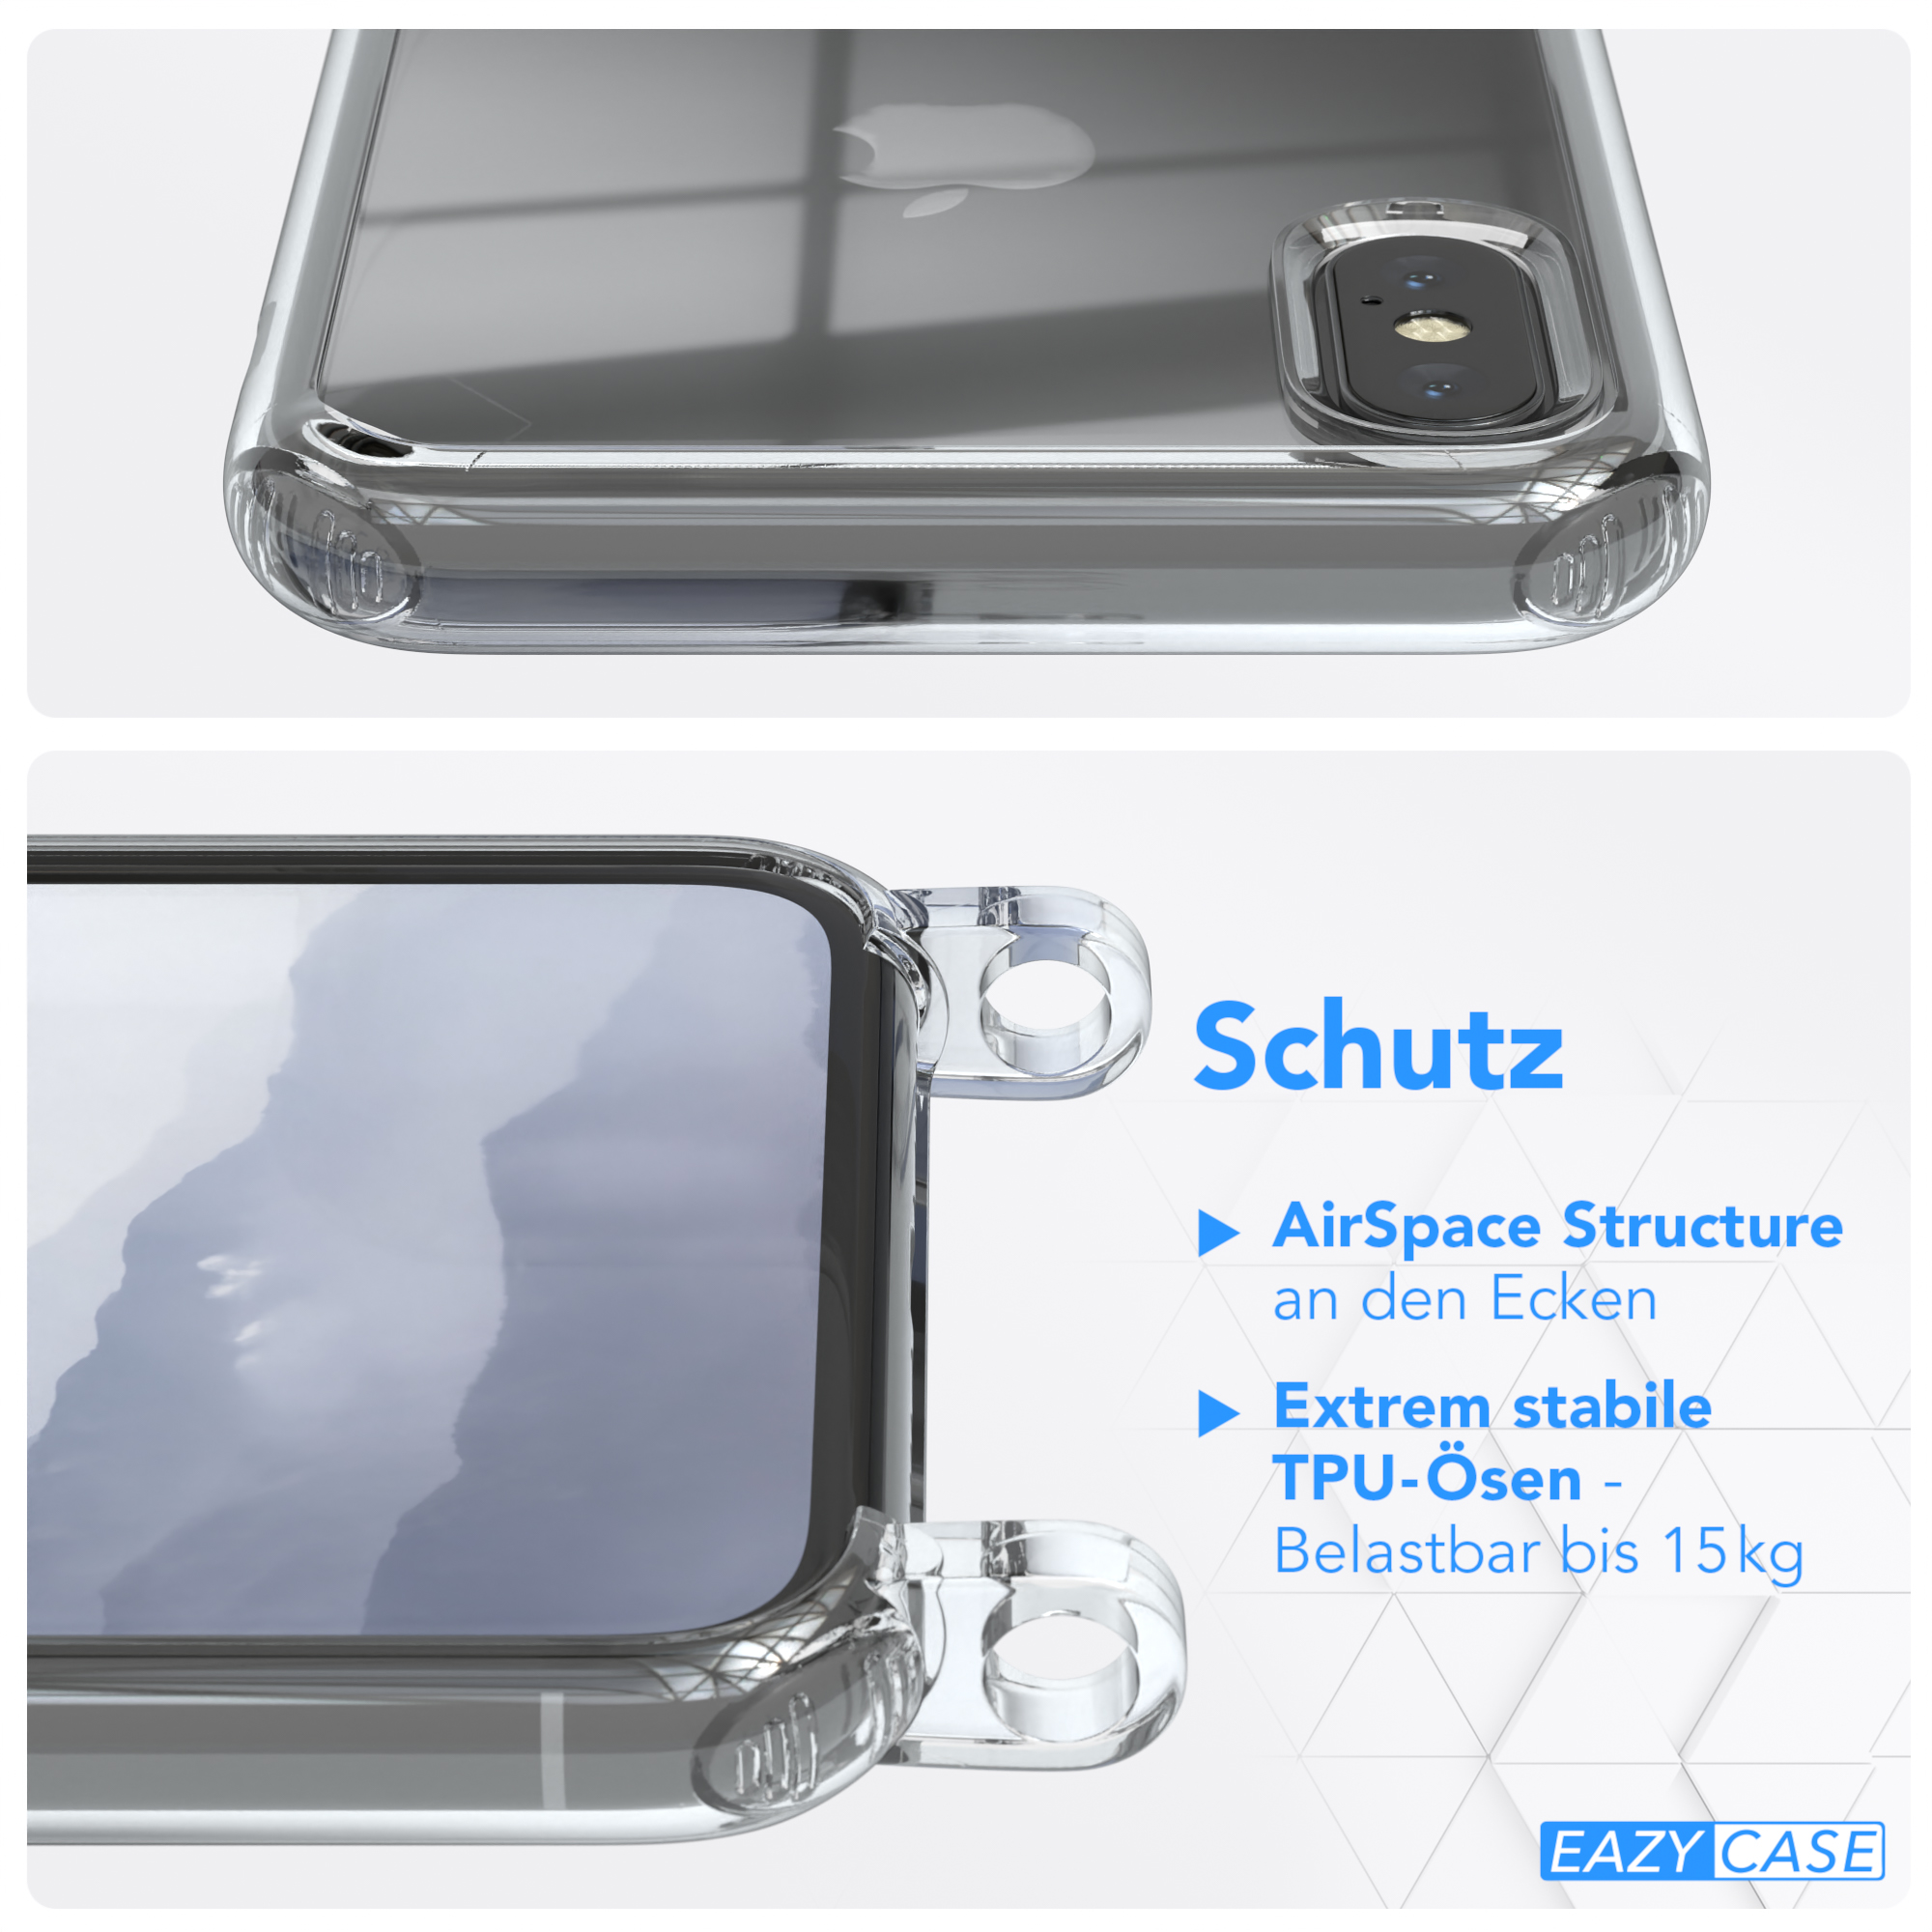 EAZY CASE Clear Cover mit Umhängetasche, XS Max, Blau iPhone Umhängeband, Apple